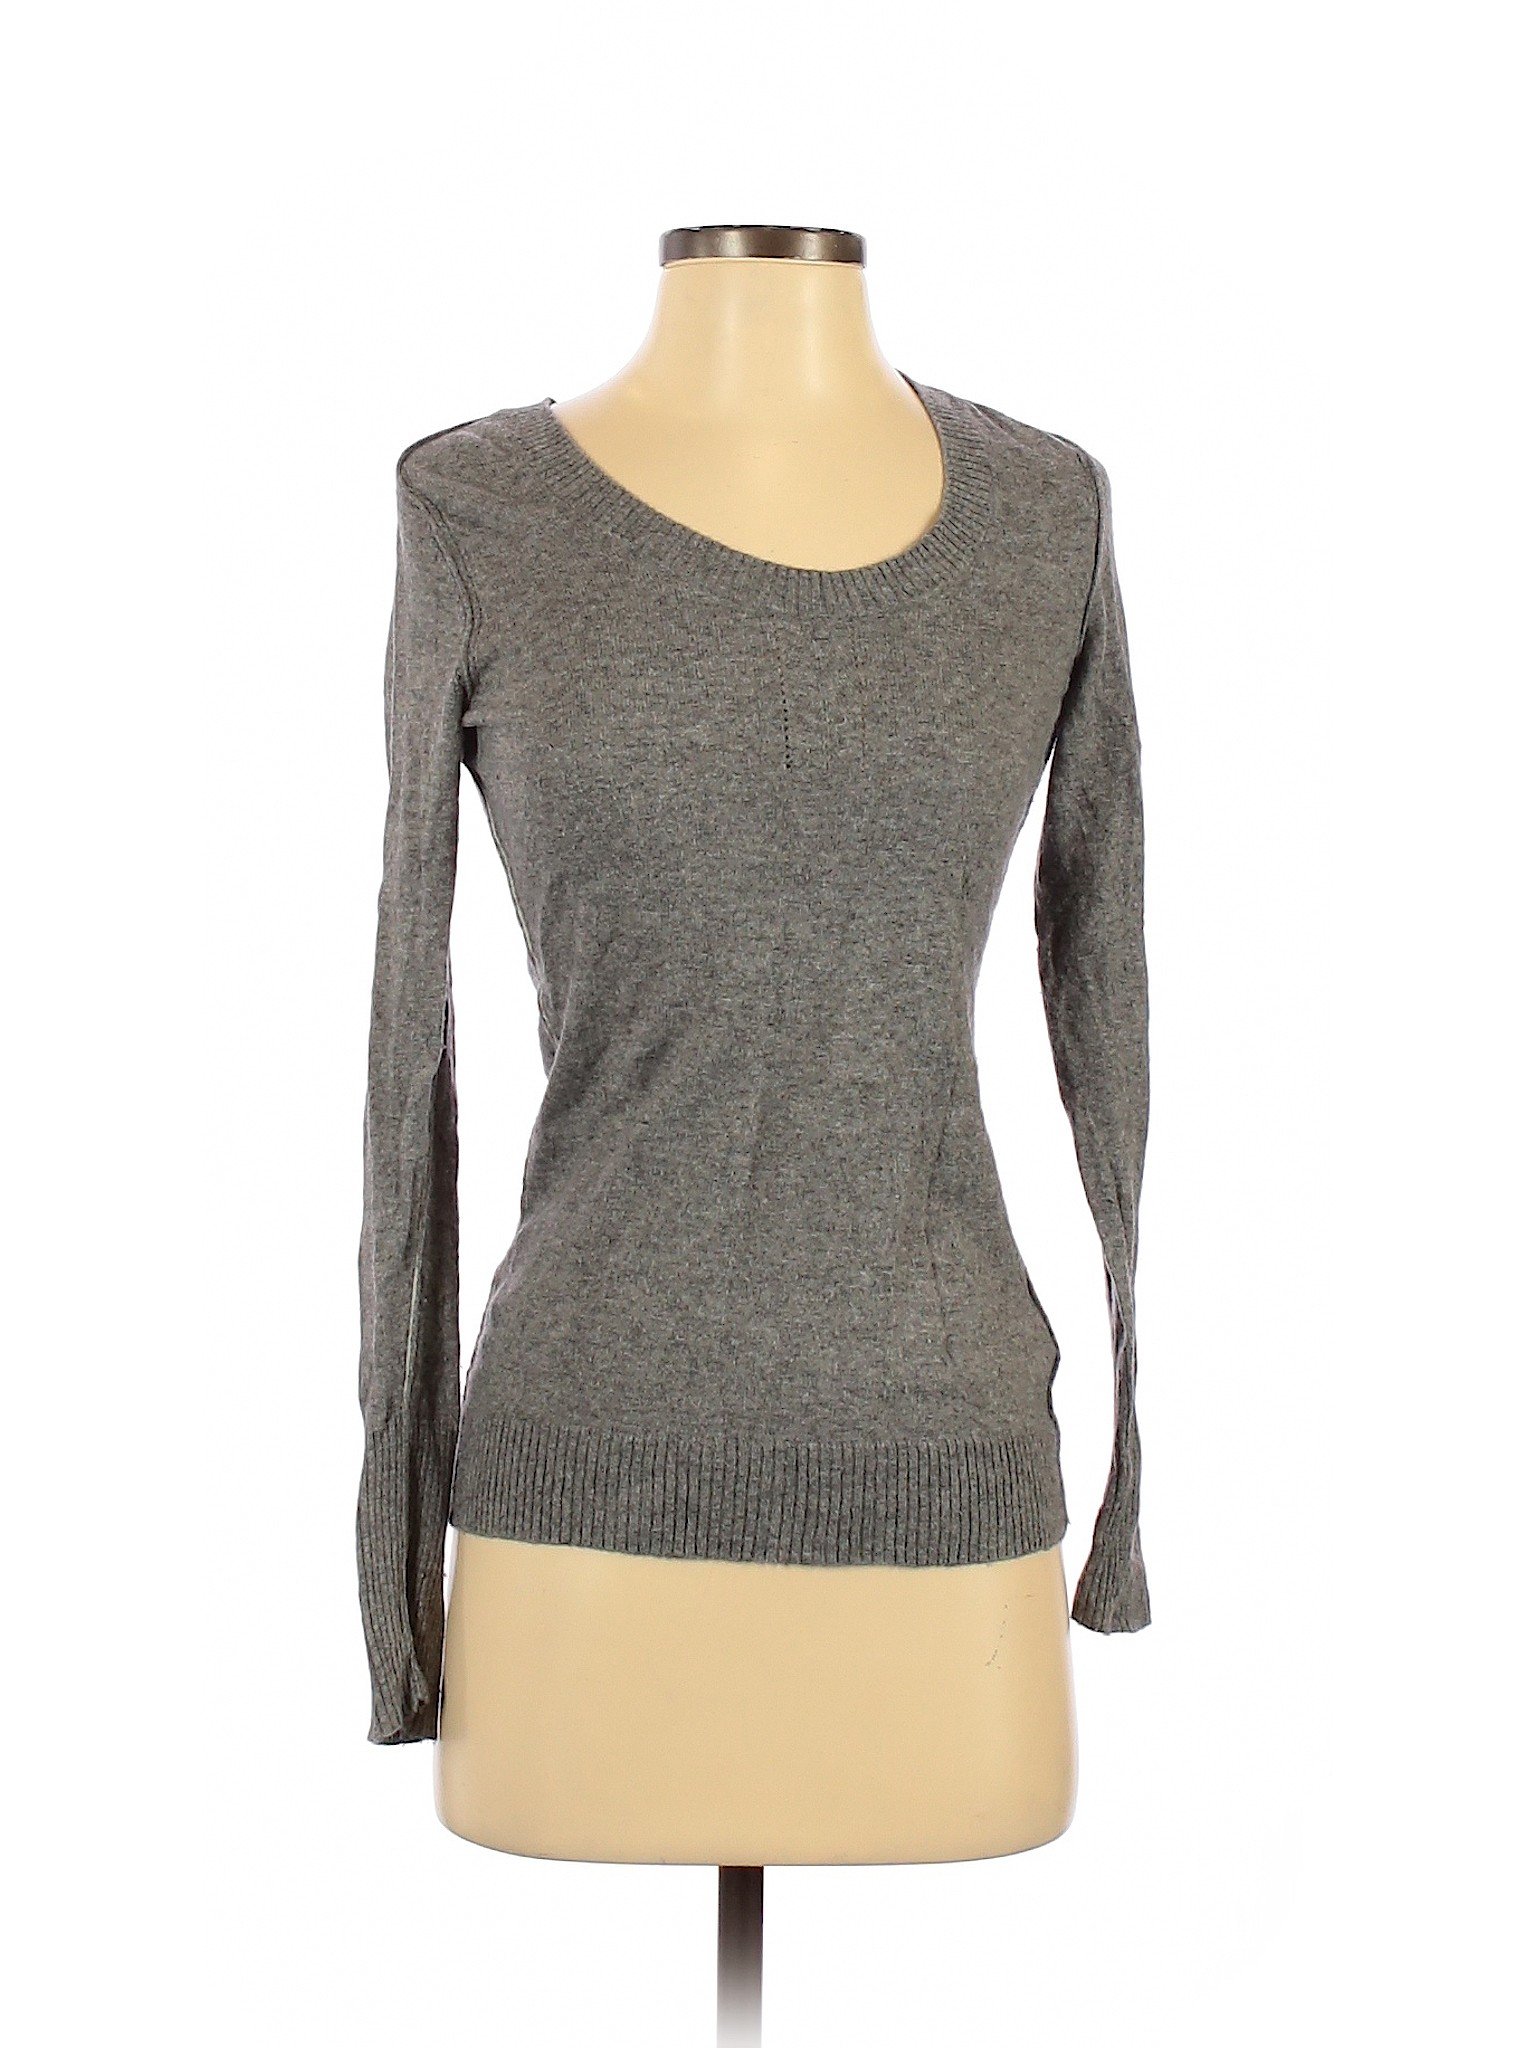 Banana Republic Women Gray Pullover Sweater XS Petites | eBay